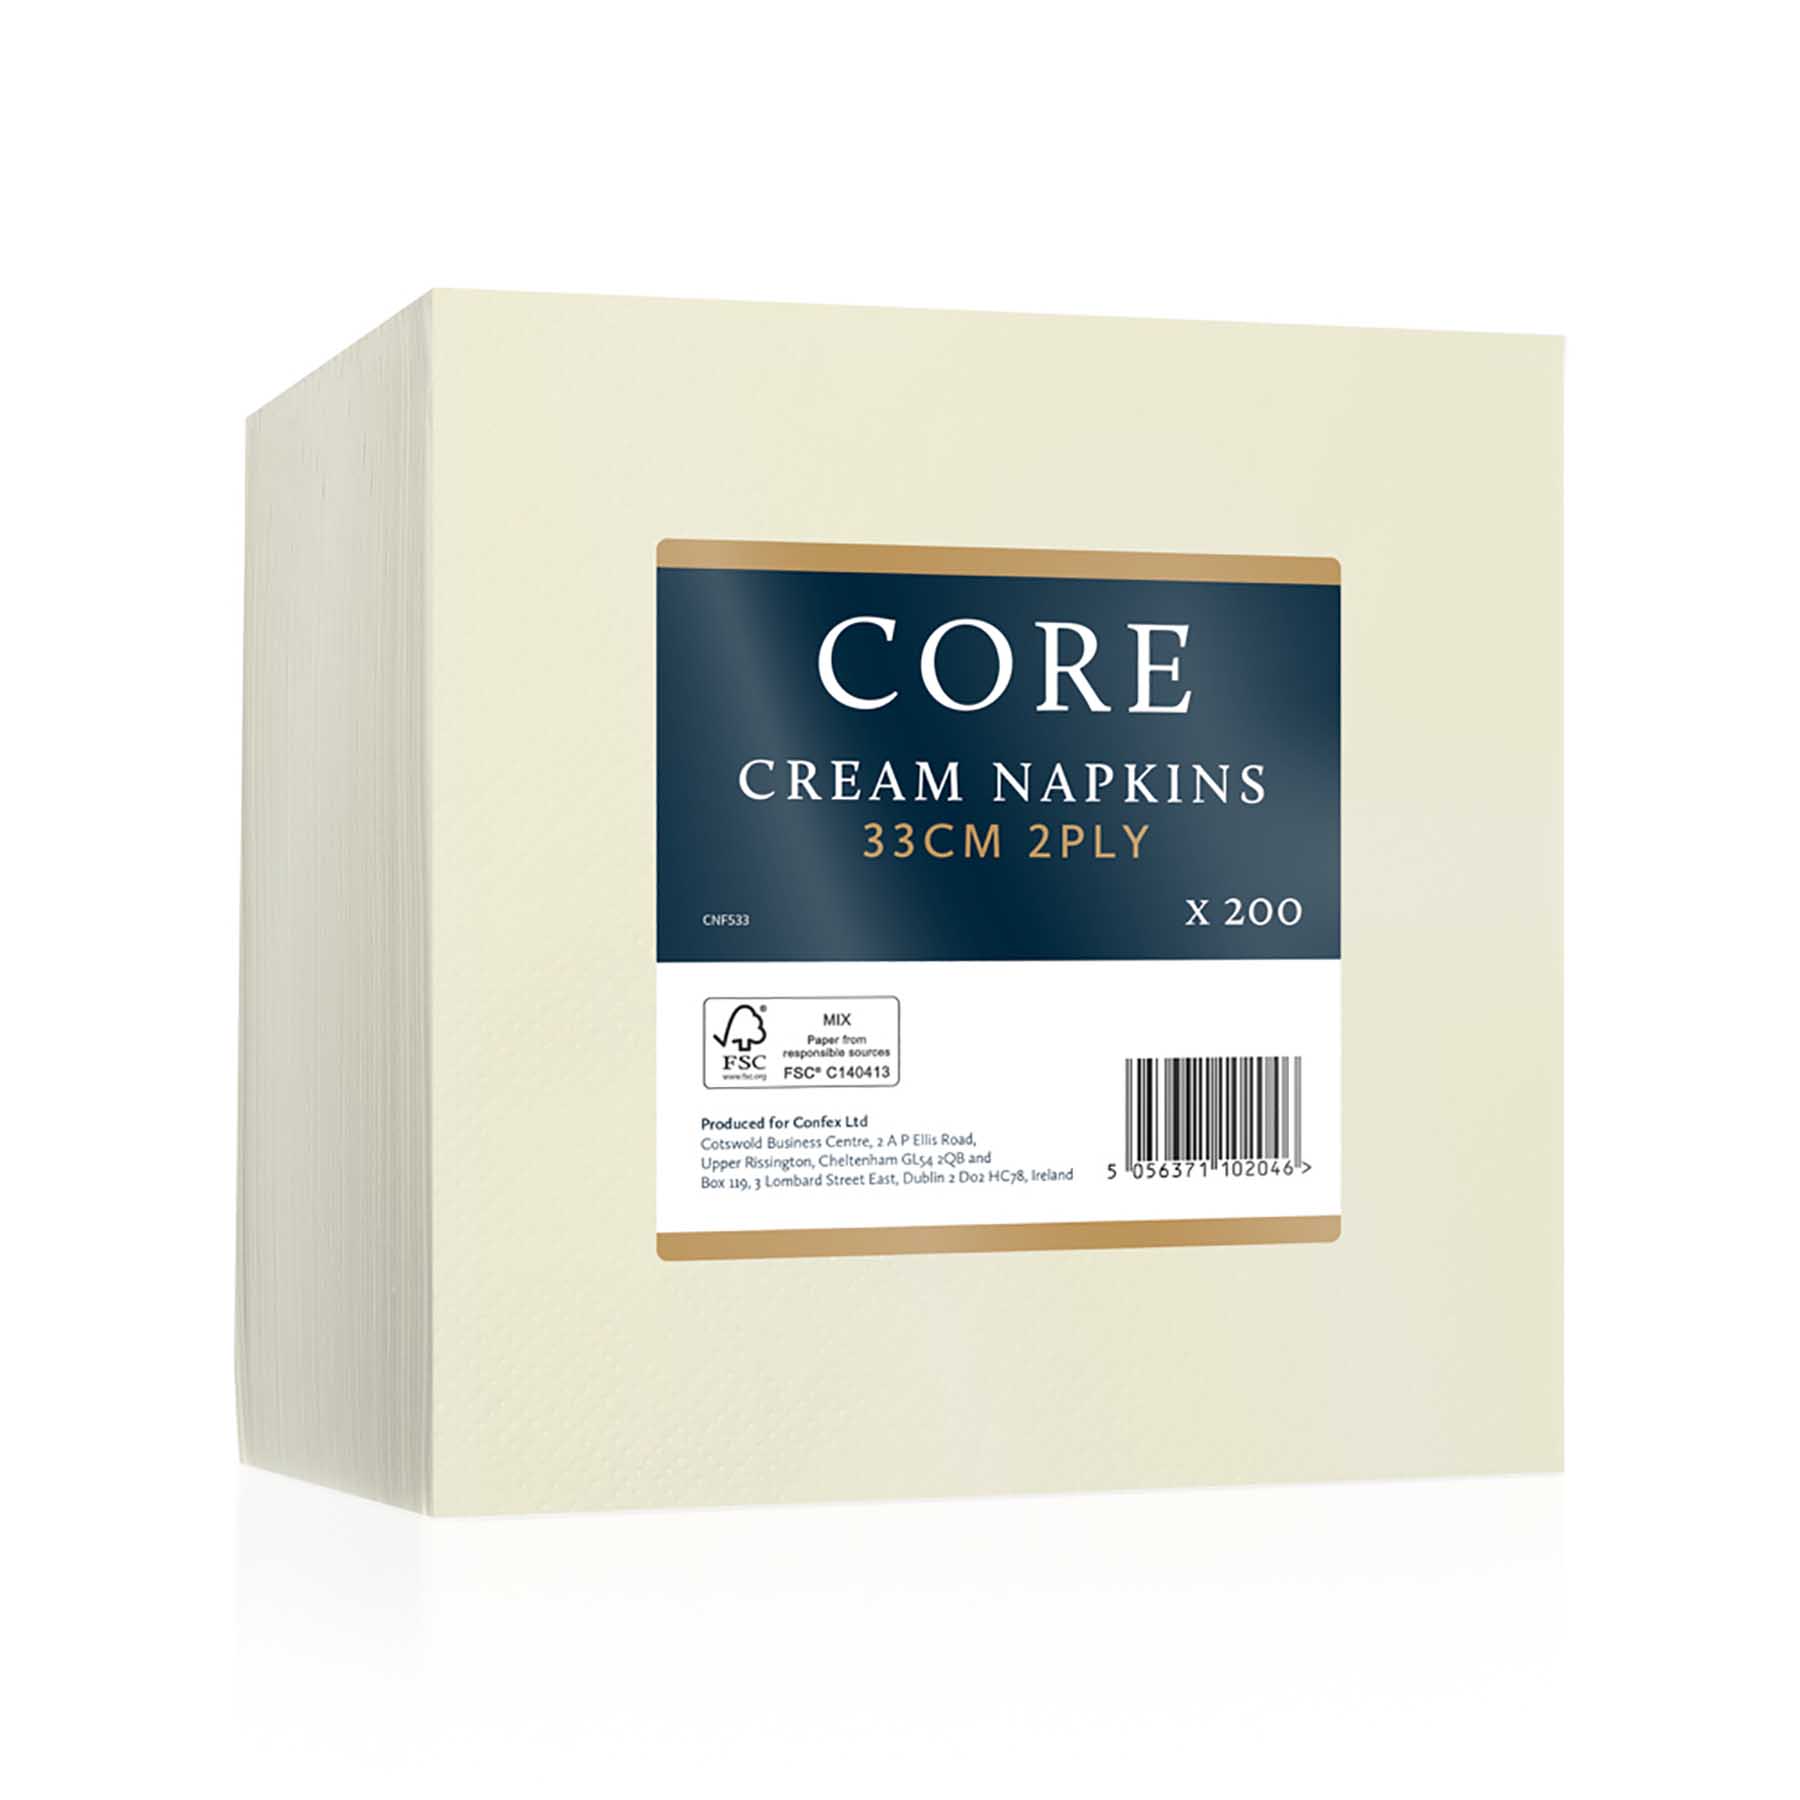 Core 33cm 2ply Cream Napkins x200